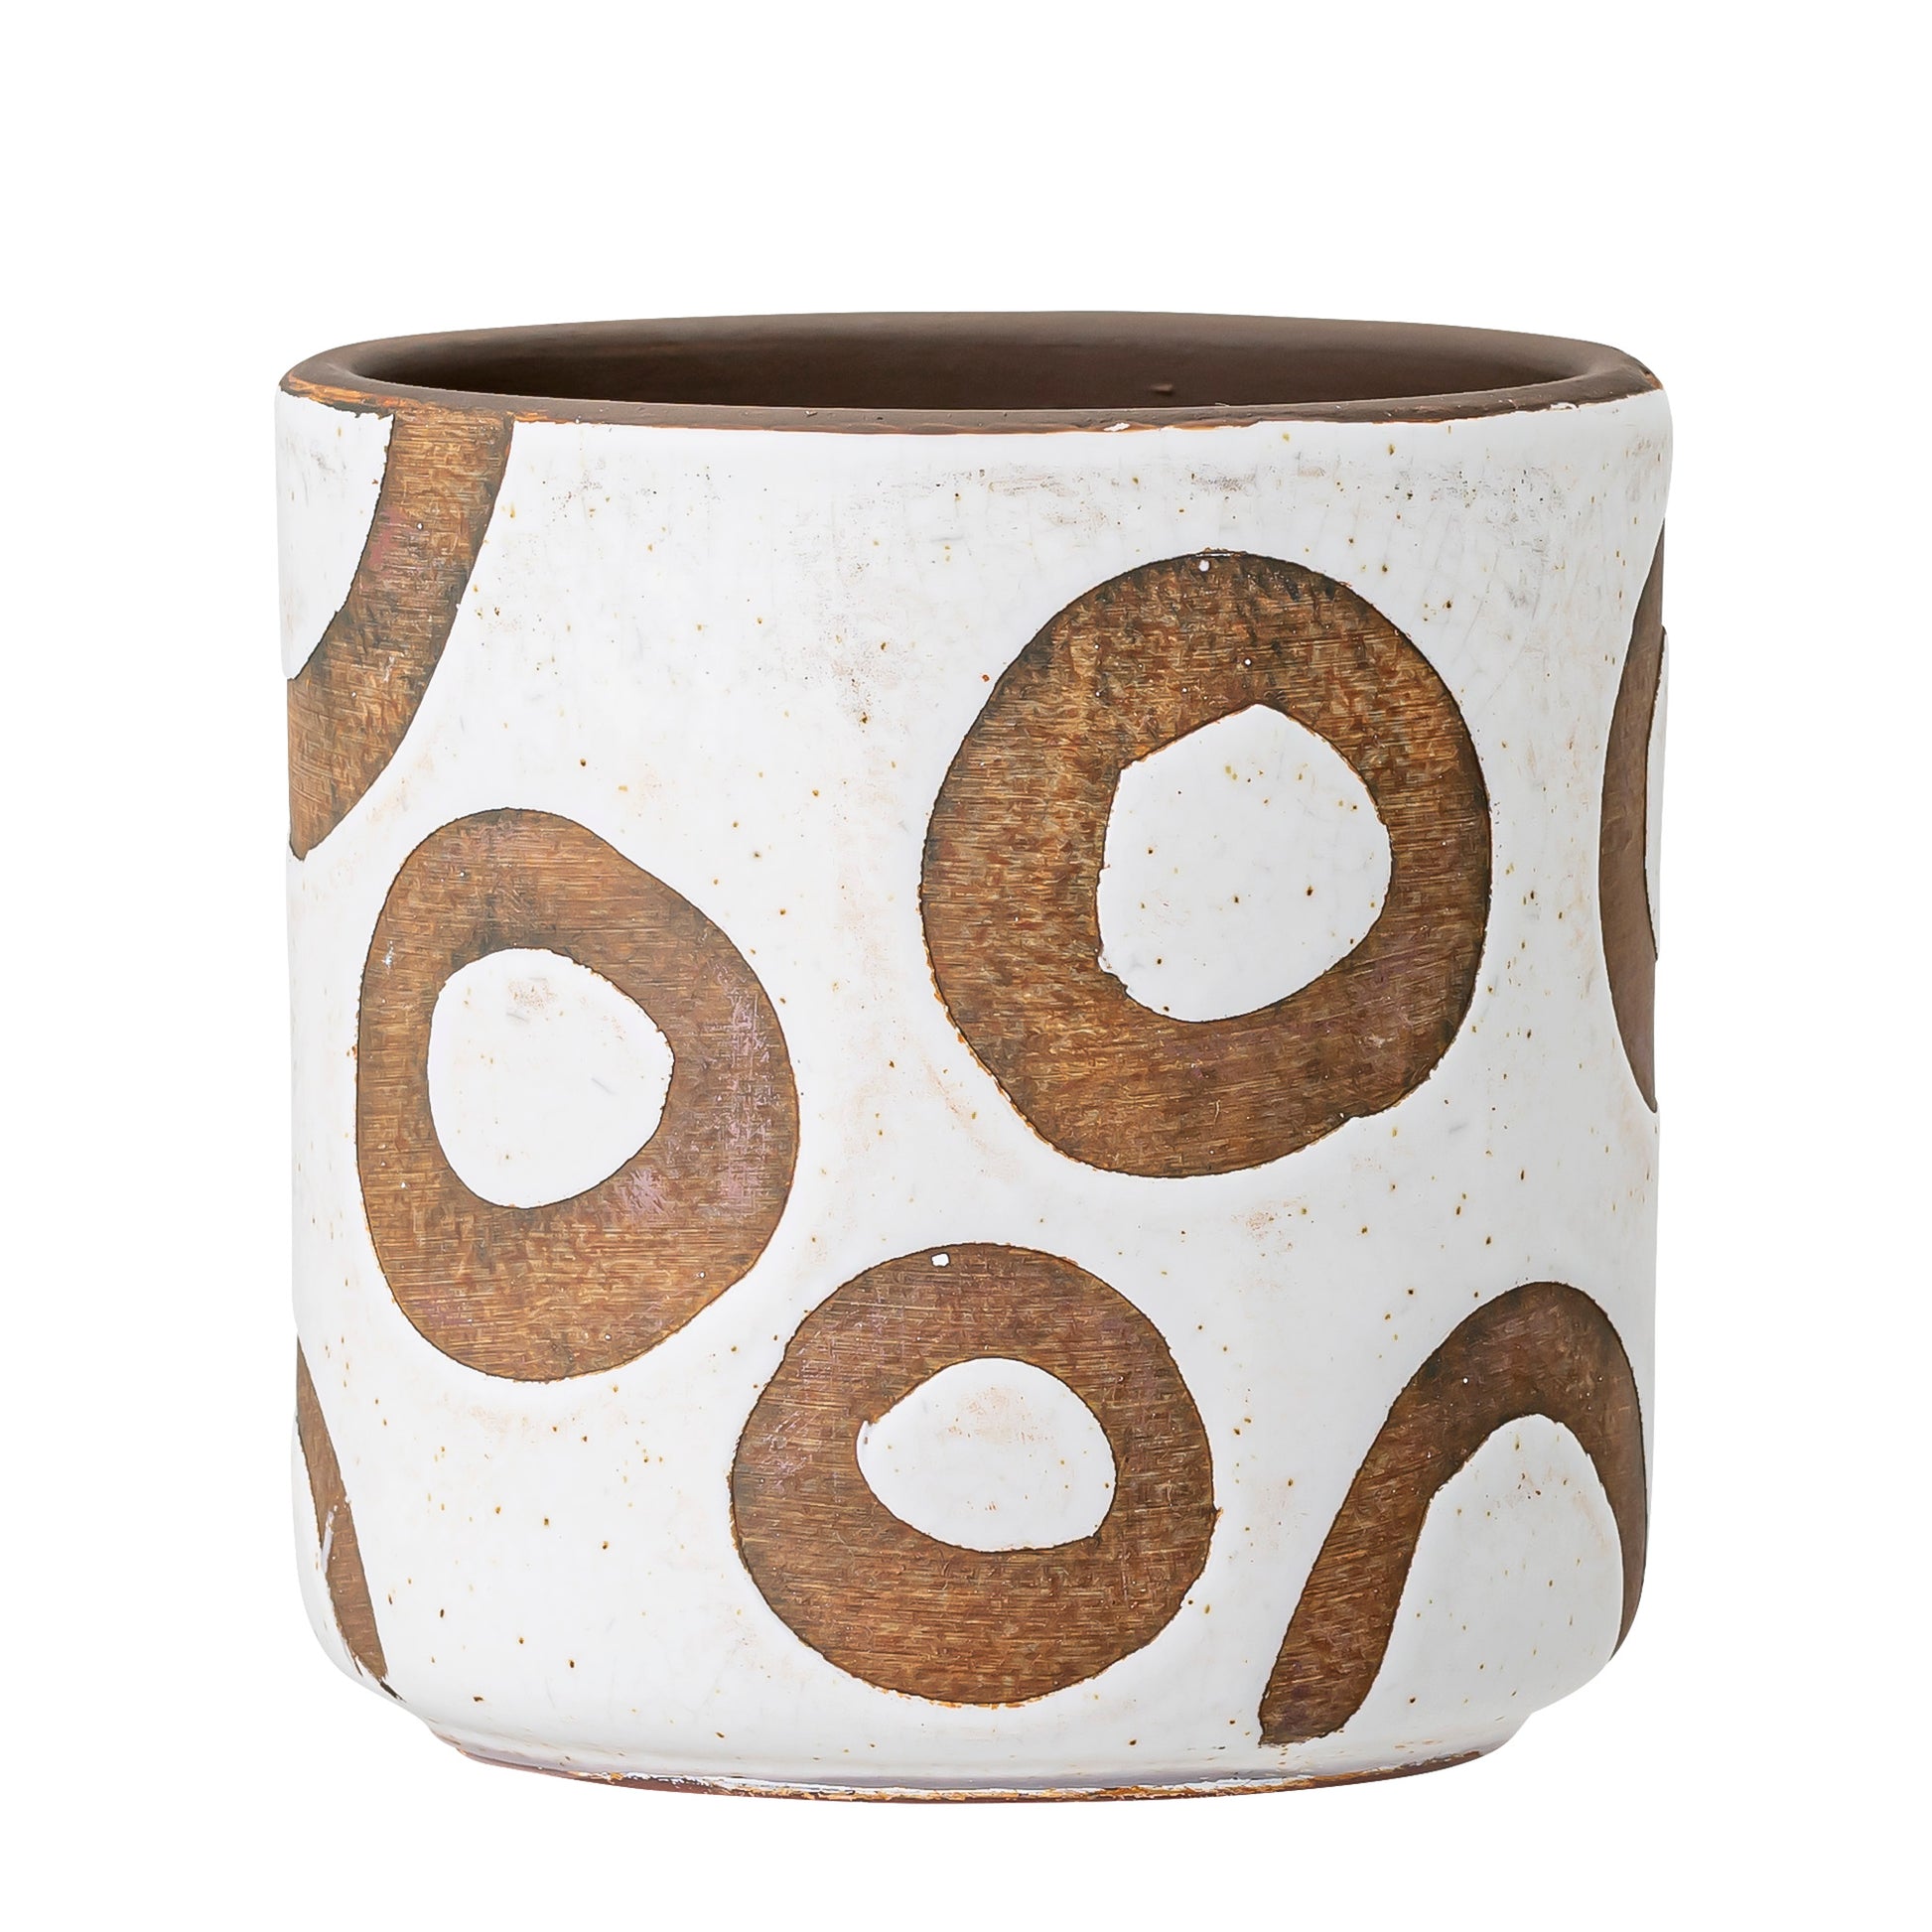 12cm Terracotta flowerpot for decoration with handpainted design.